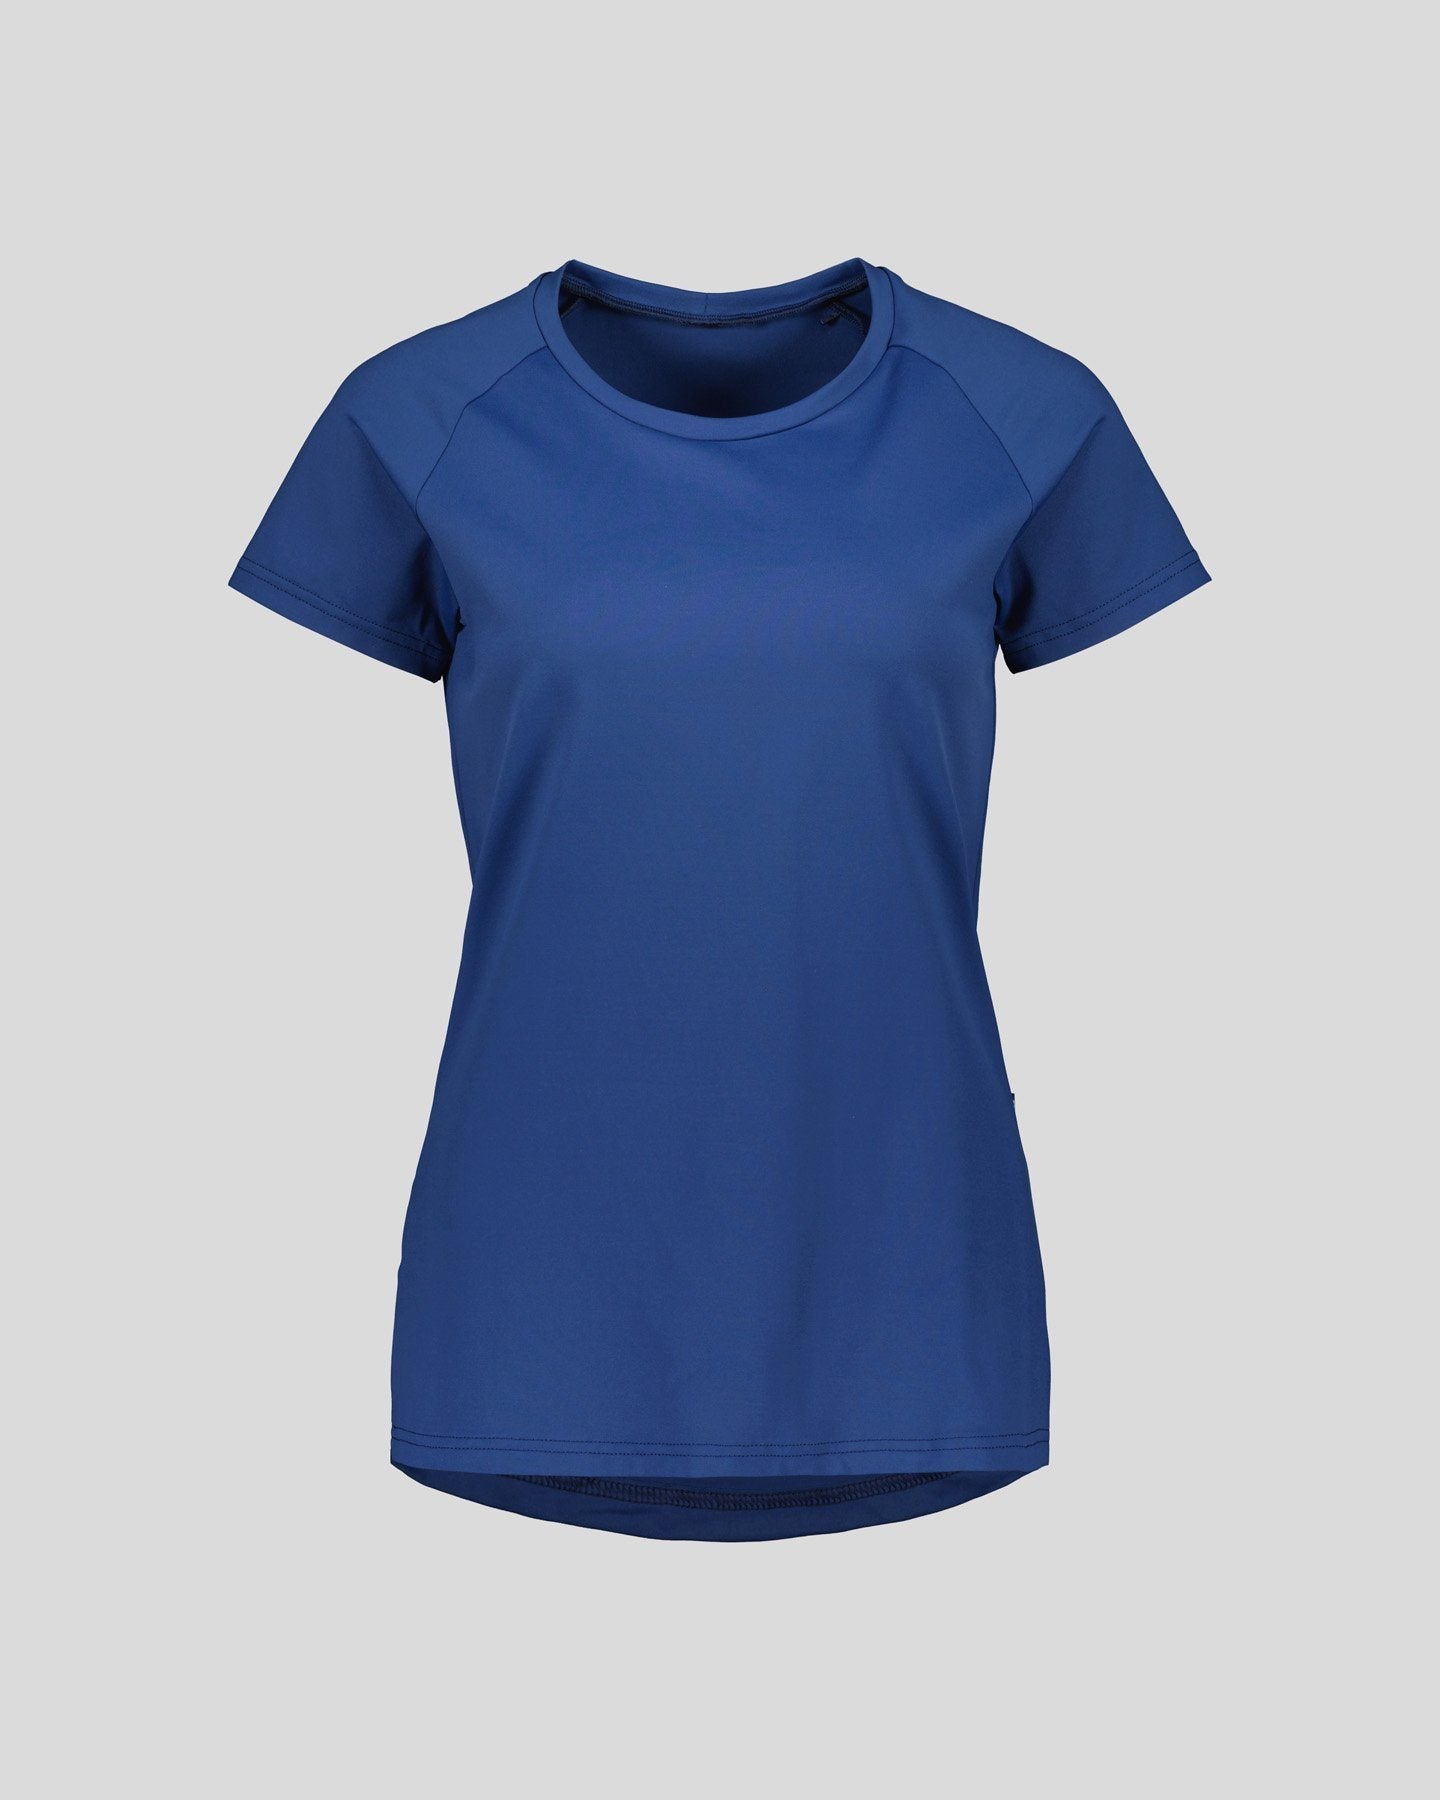 Népra - W's Cella Sport T-Shirt - Oeko-tex 100 Standard Certified Polyamide - Weekendbee - sustainable sportswear